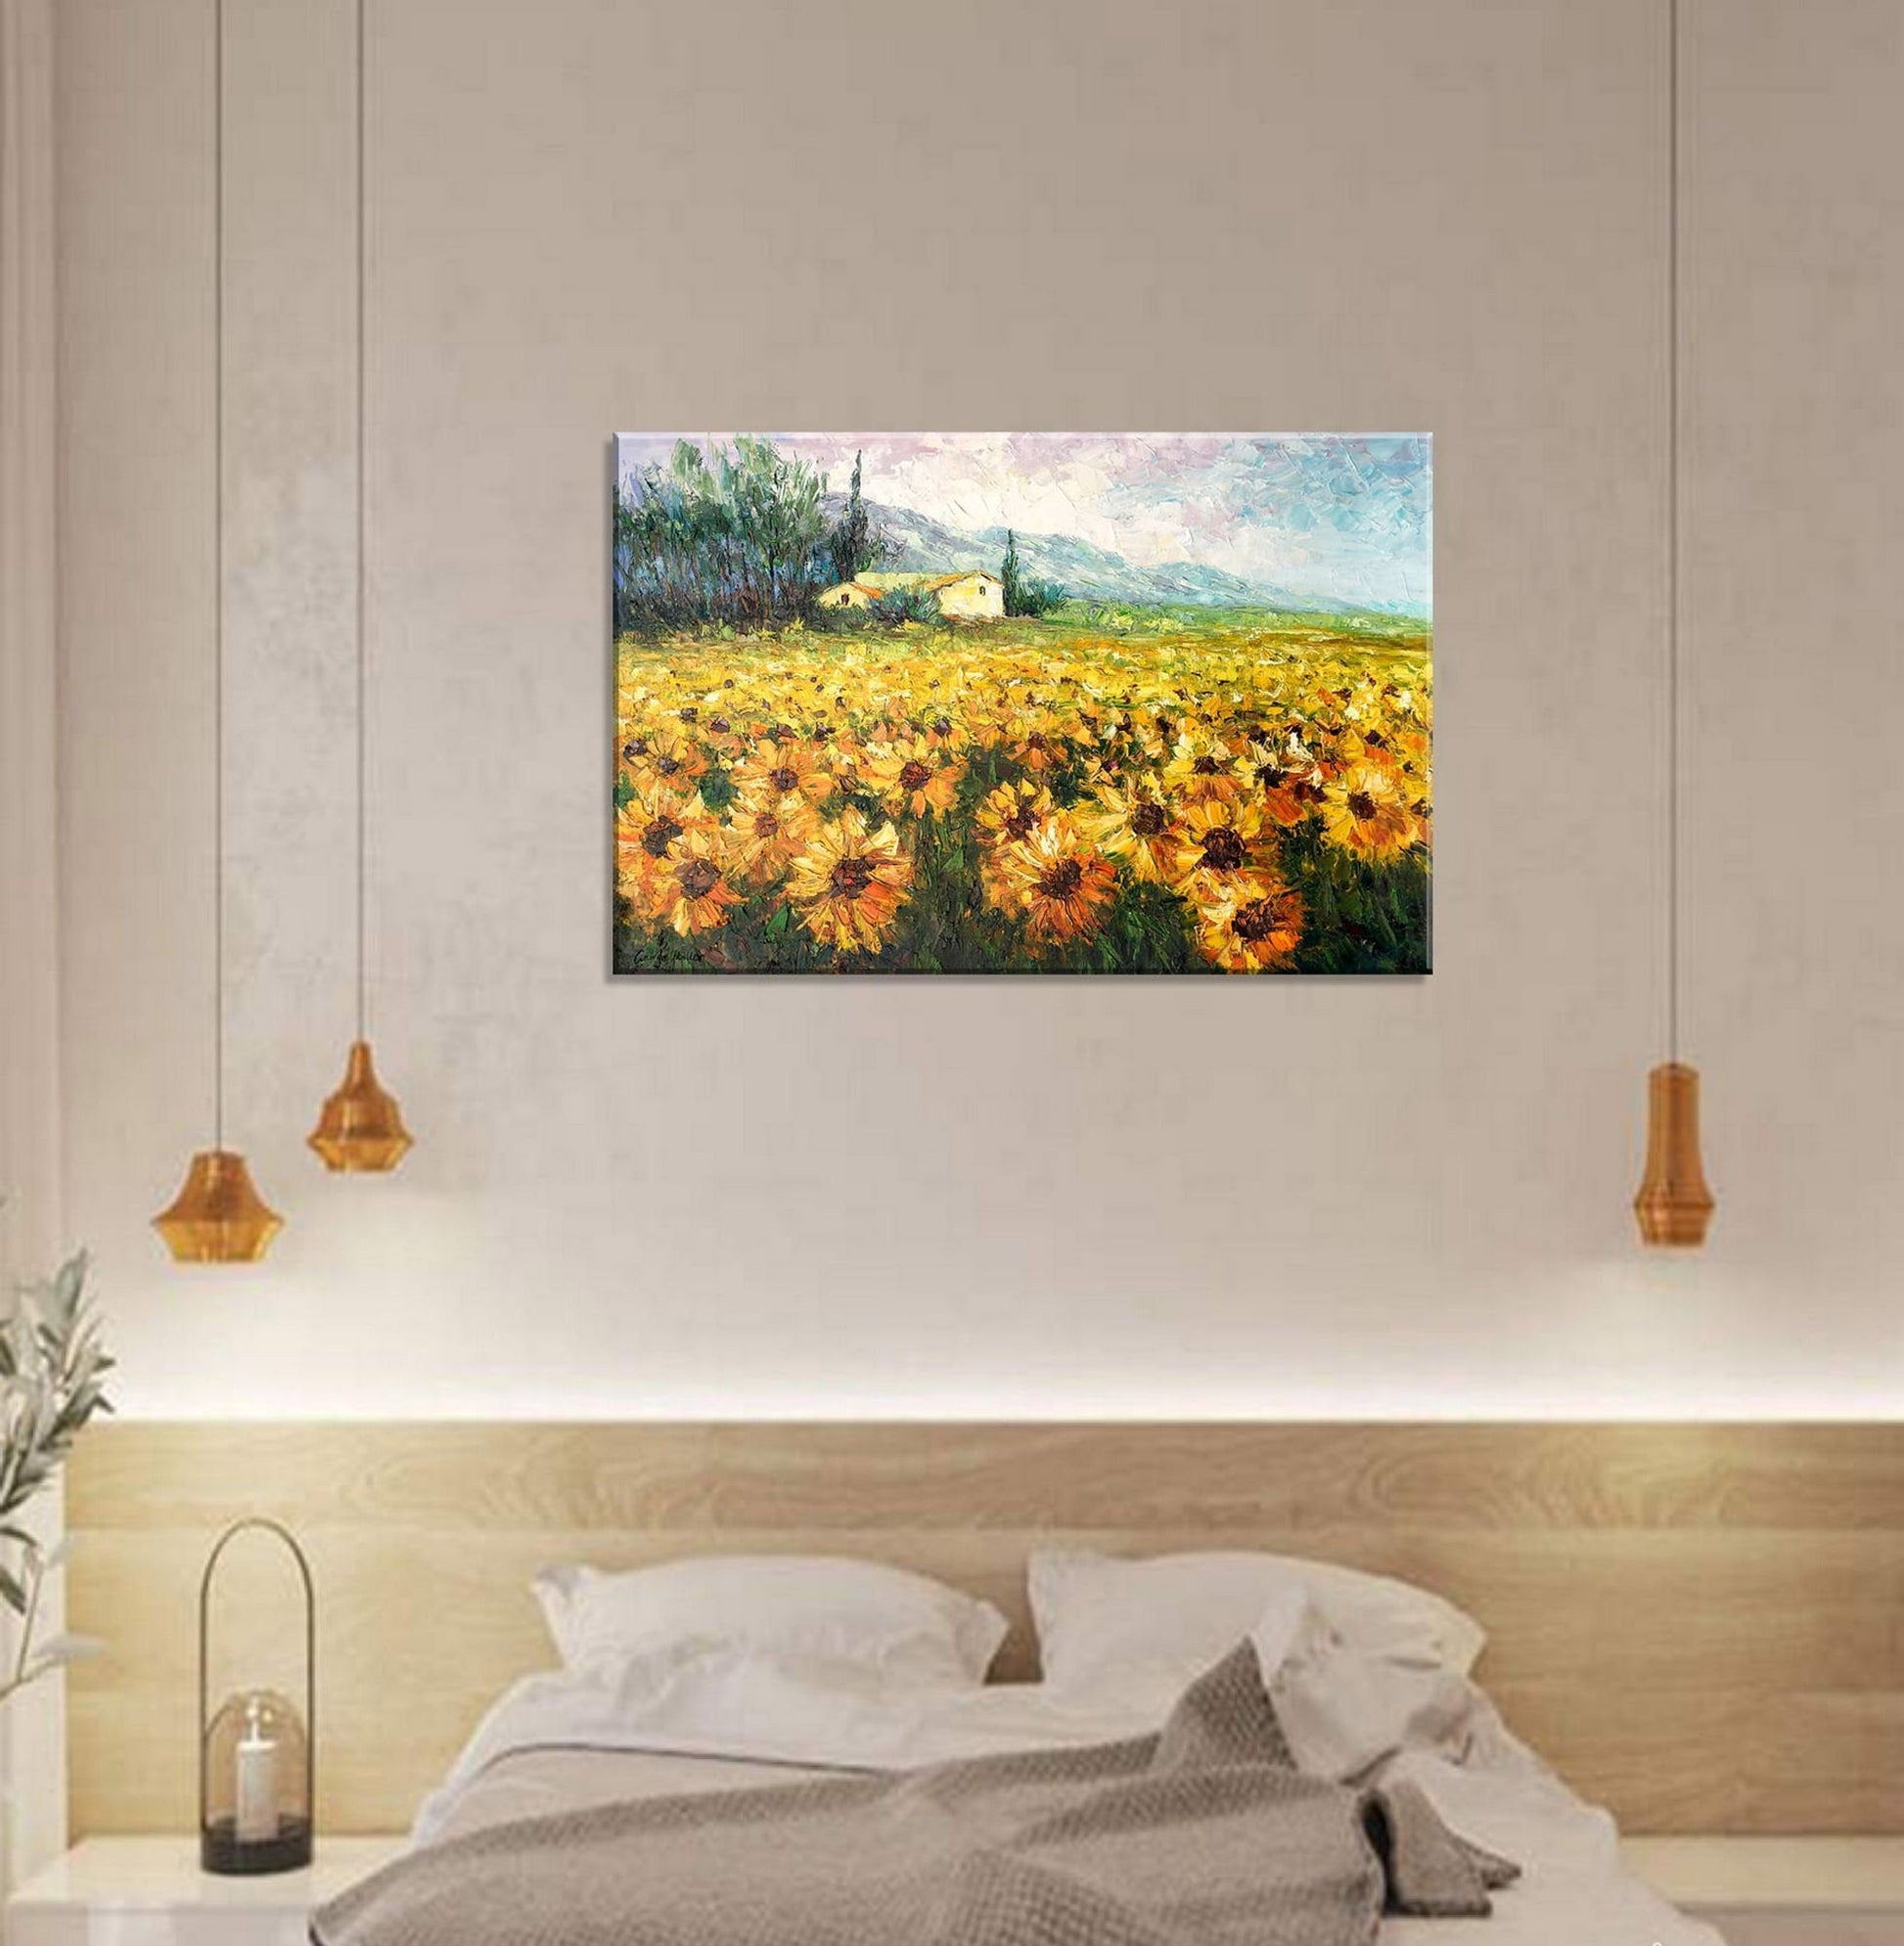 Large Landscape Painting Sunflower Garden, Abstract Painting, Abstract Wall Art, Canvas Art, Large Abstract Painting, Palette Knife Painting